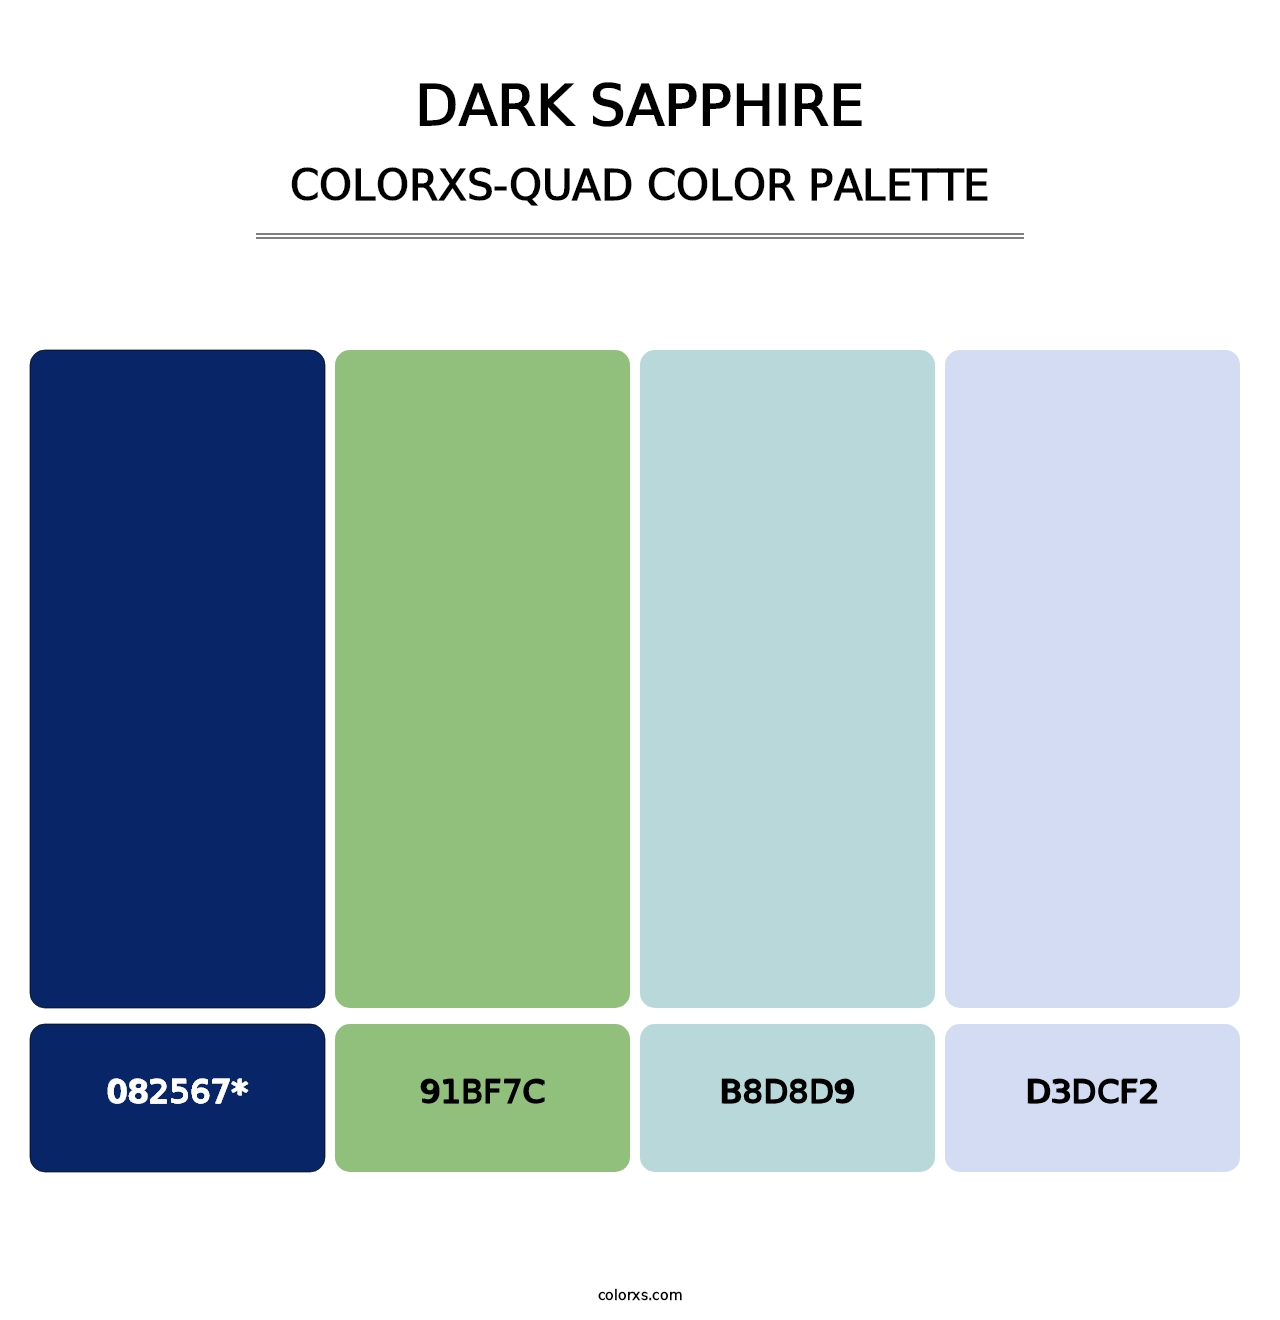 Dark Sapphire - Colorxs Quad Palette